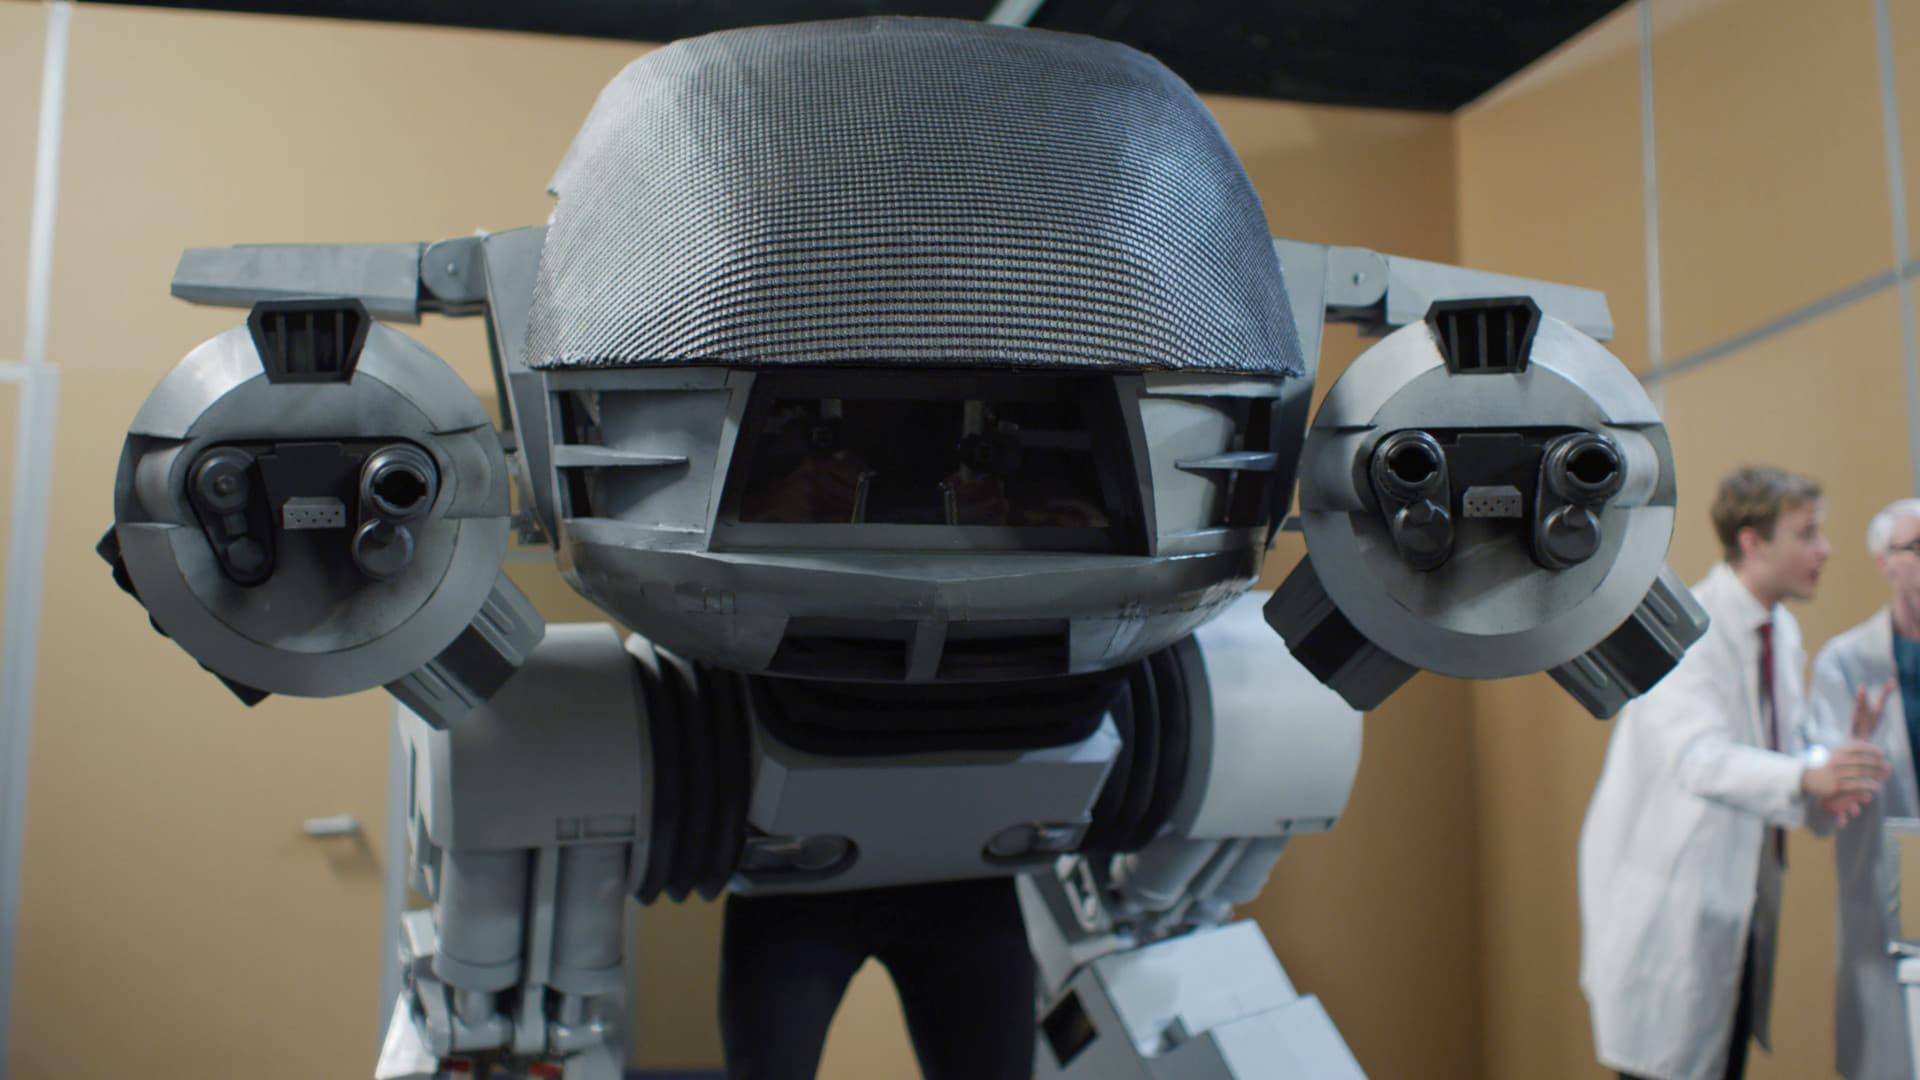 Our RoboCop Remake backdrop